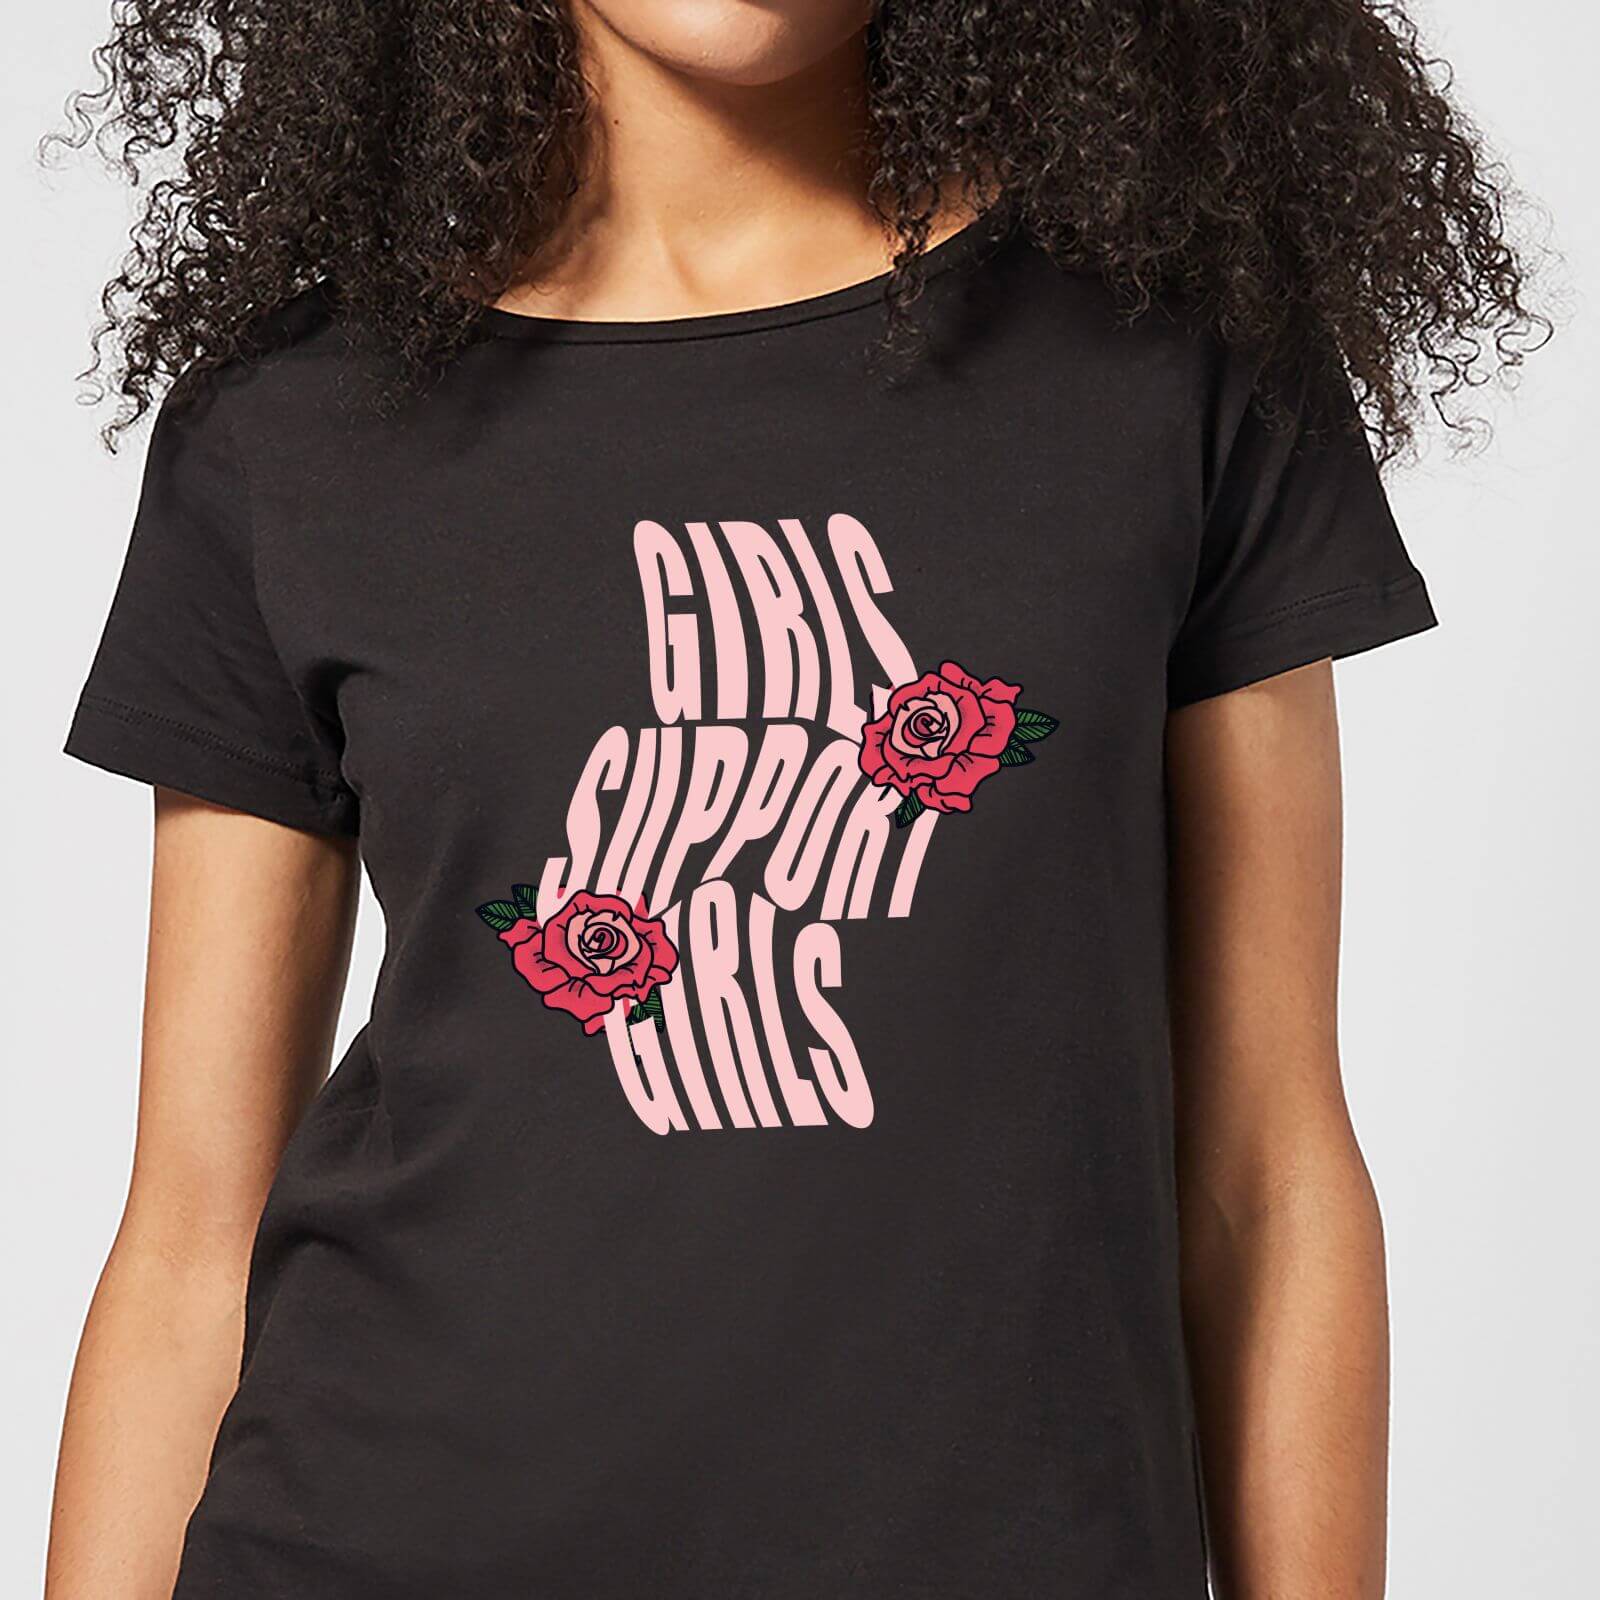 Girls Support Girls Women's T-Shirt - Black - S - Black